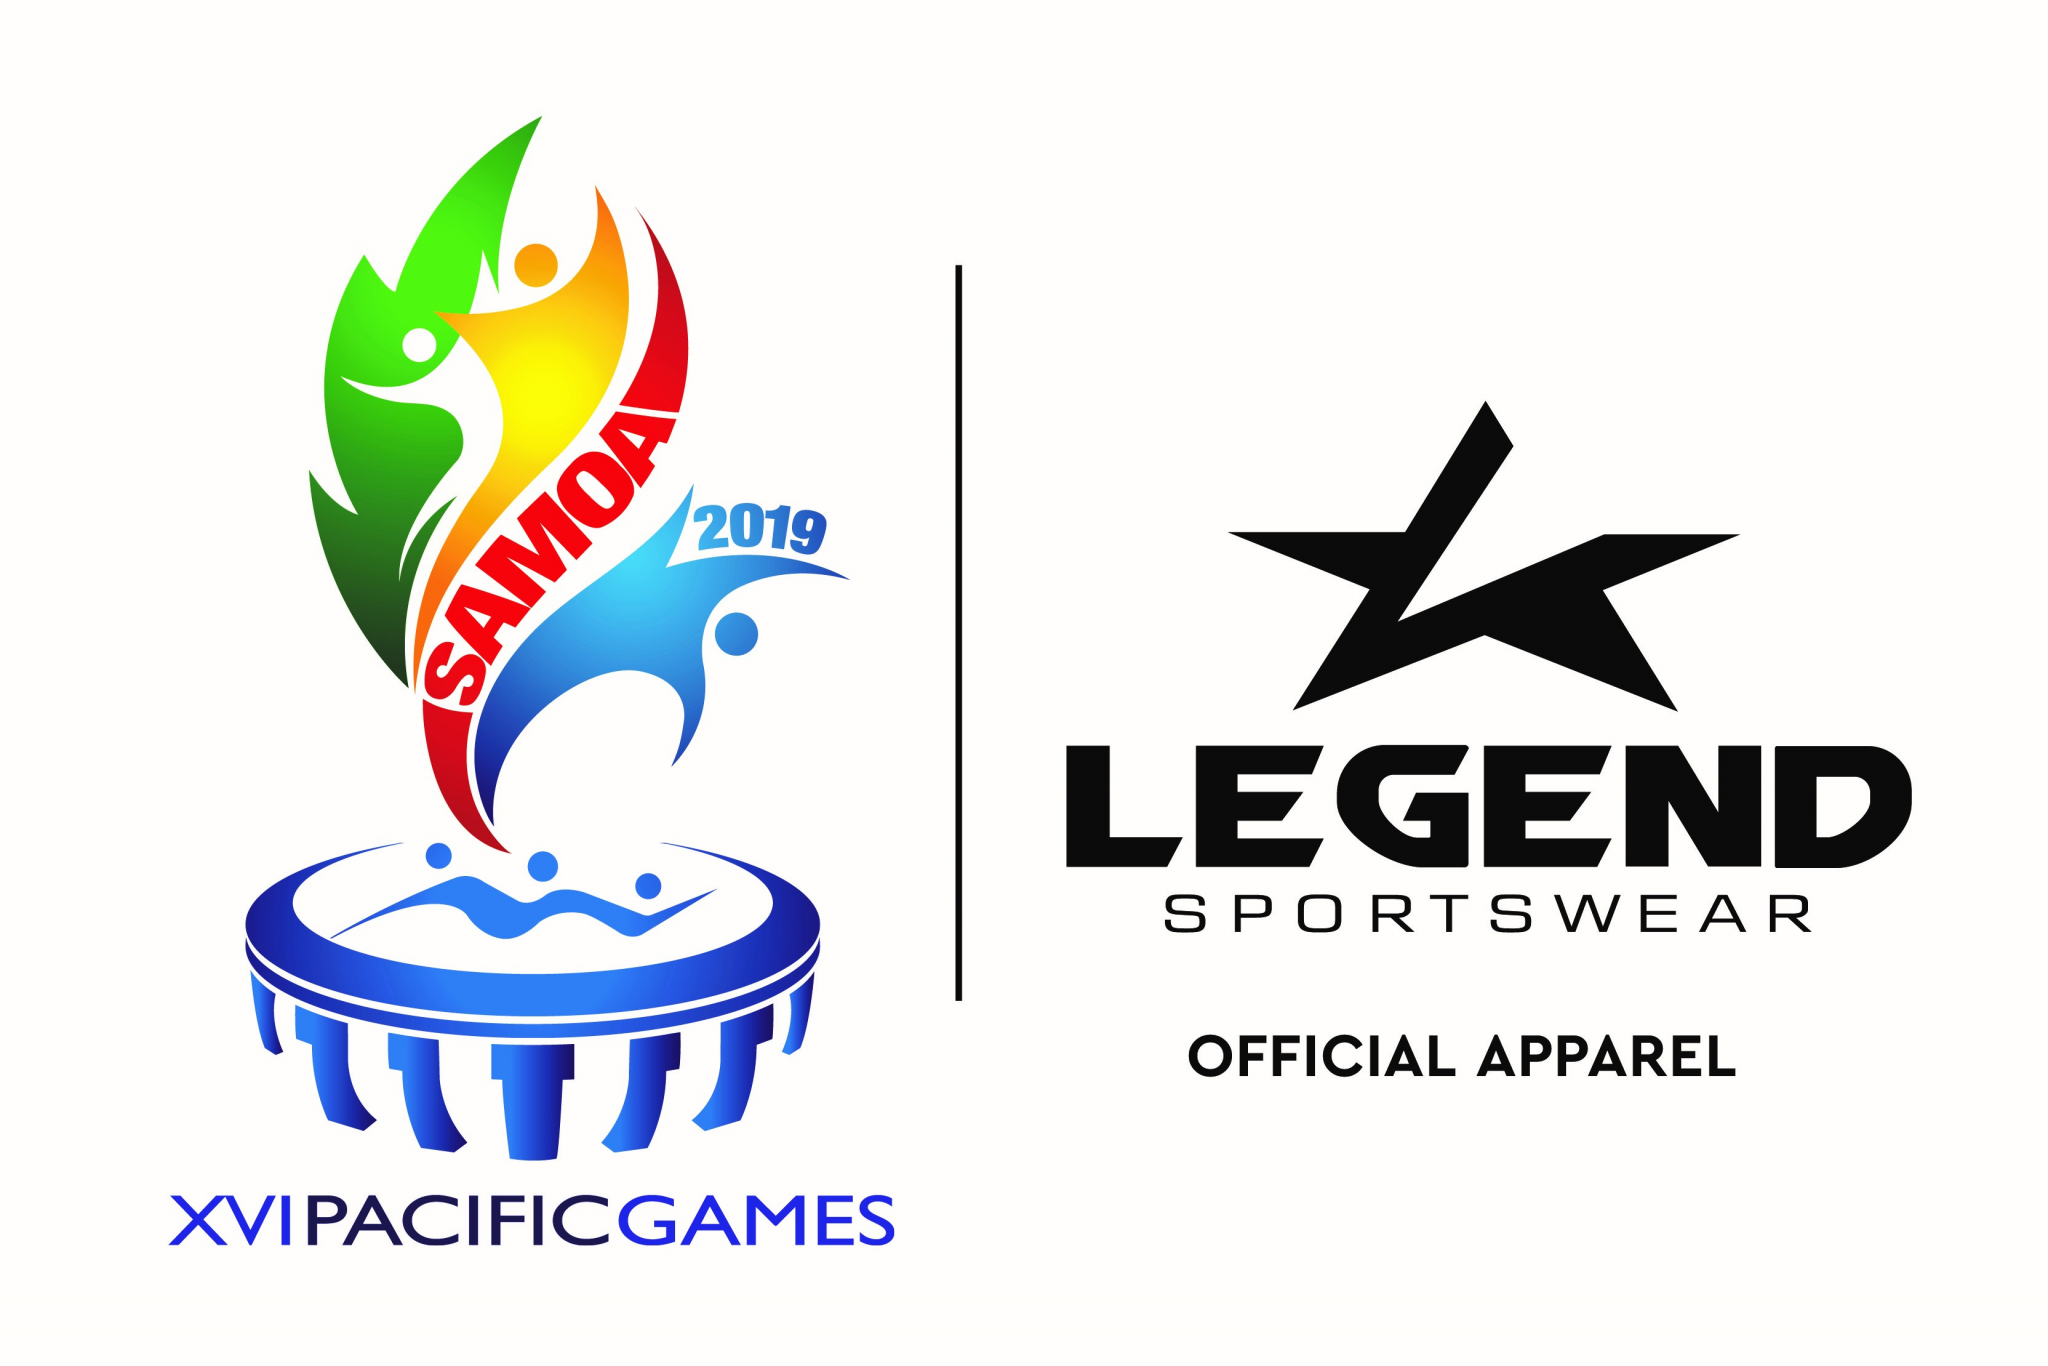 Legend Sportswear are the official apparel partner for Samoa 2019 ©Samoa 2019